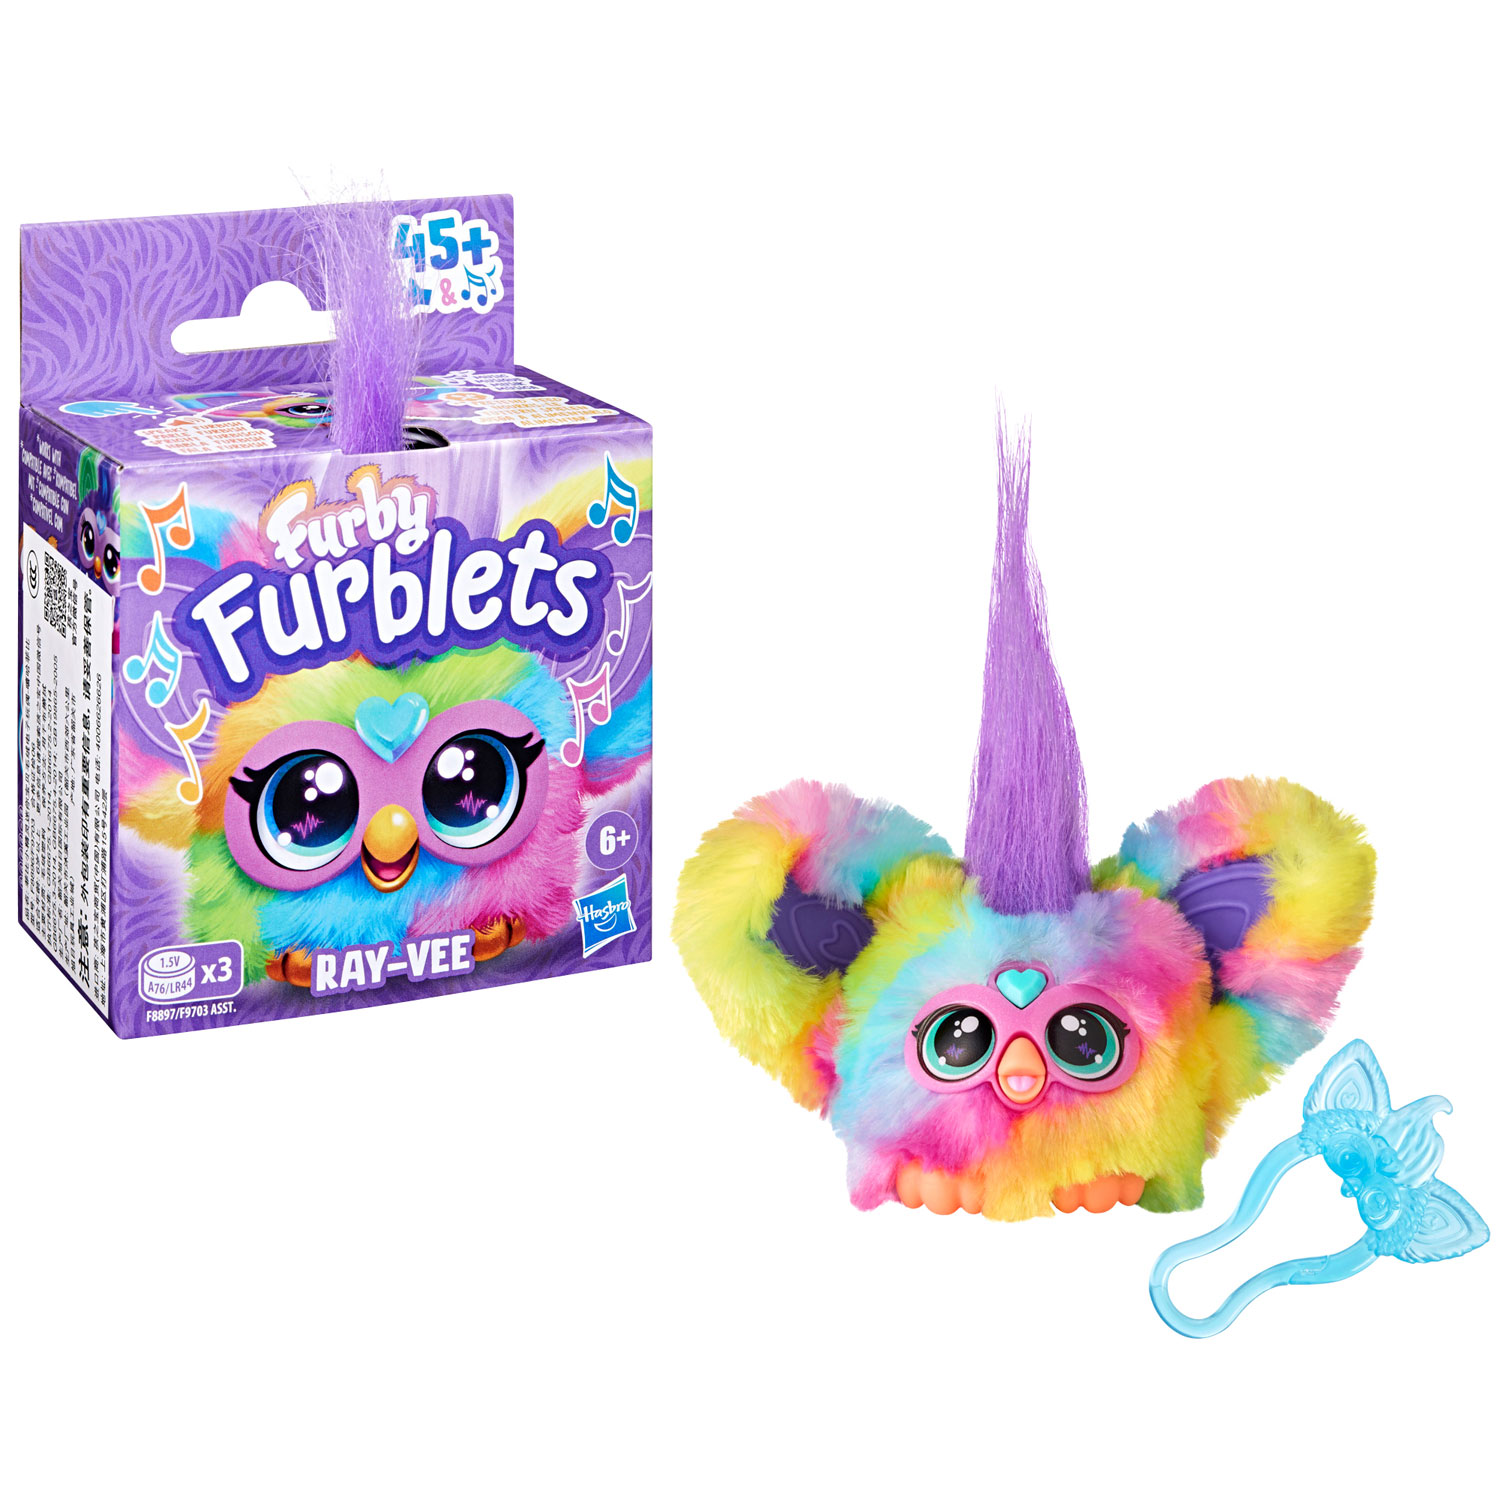 Hasbro Furby Furblets Ray-Vee Electronic Plush Toy